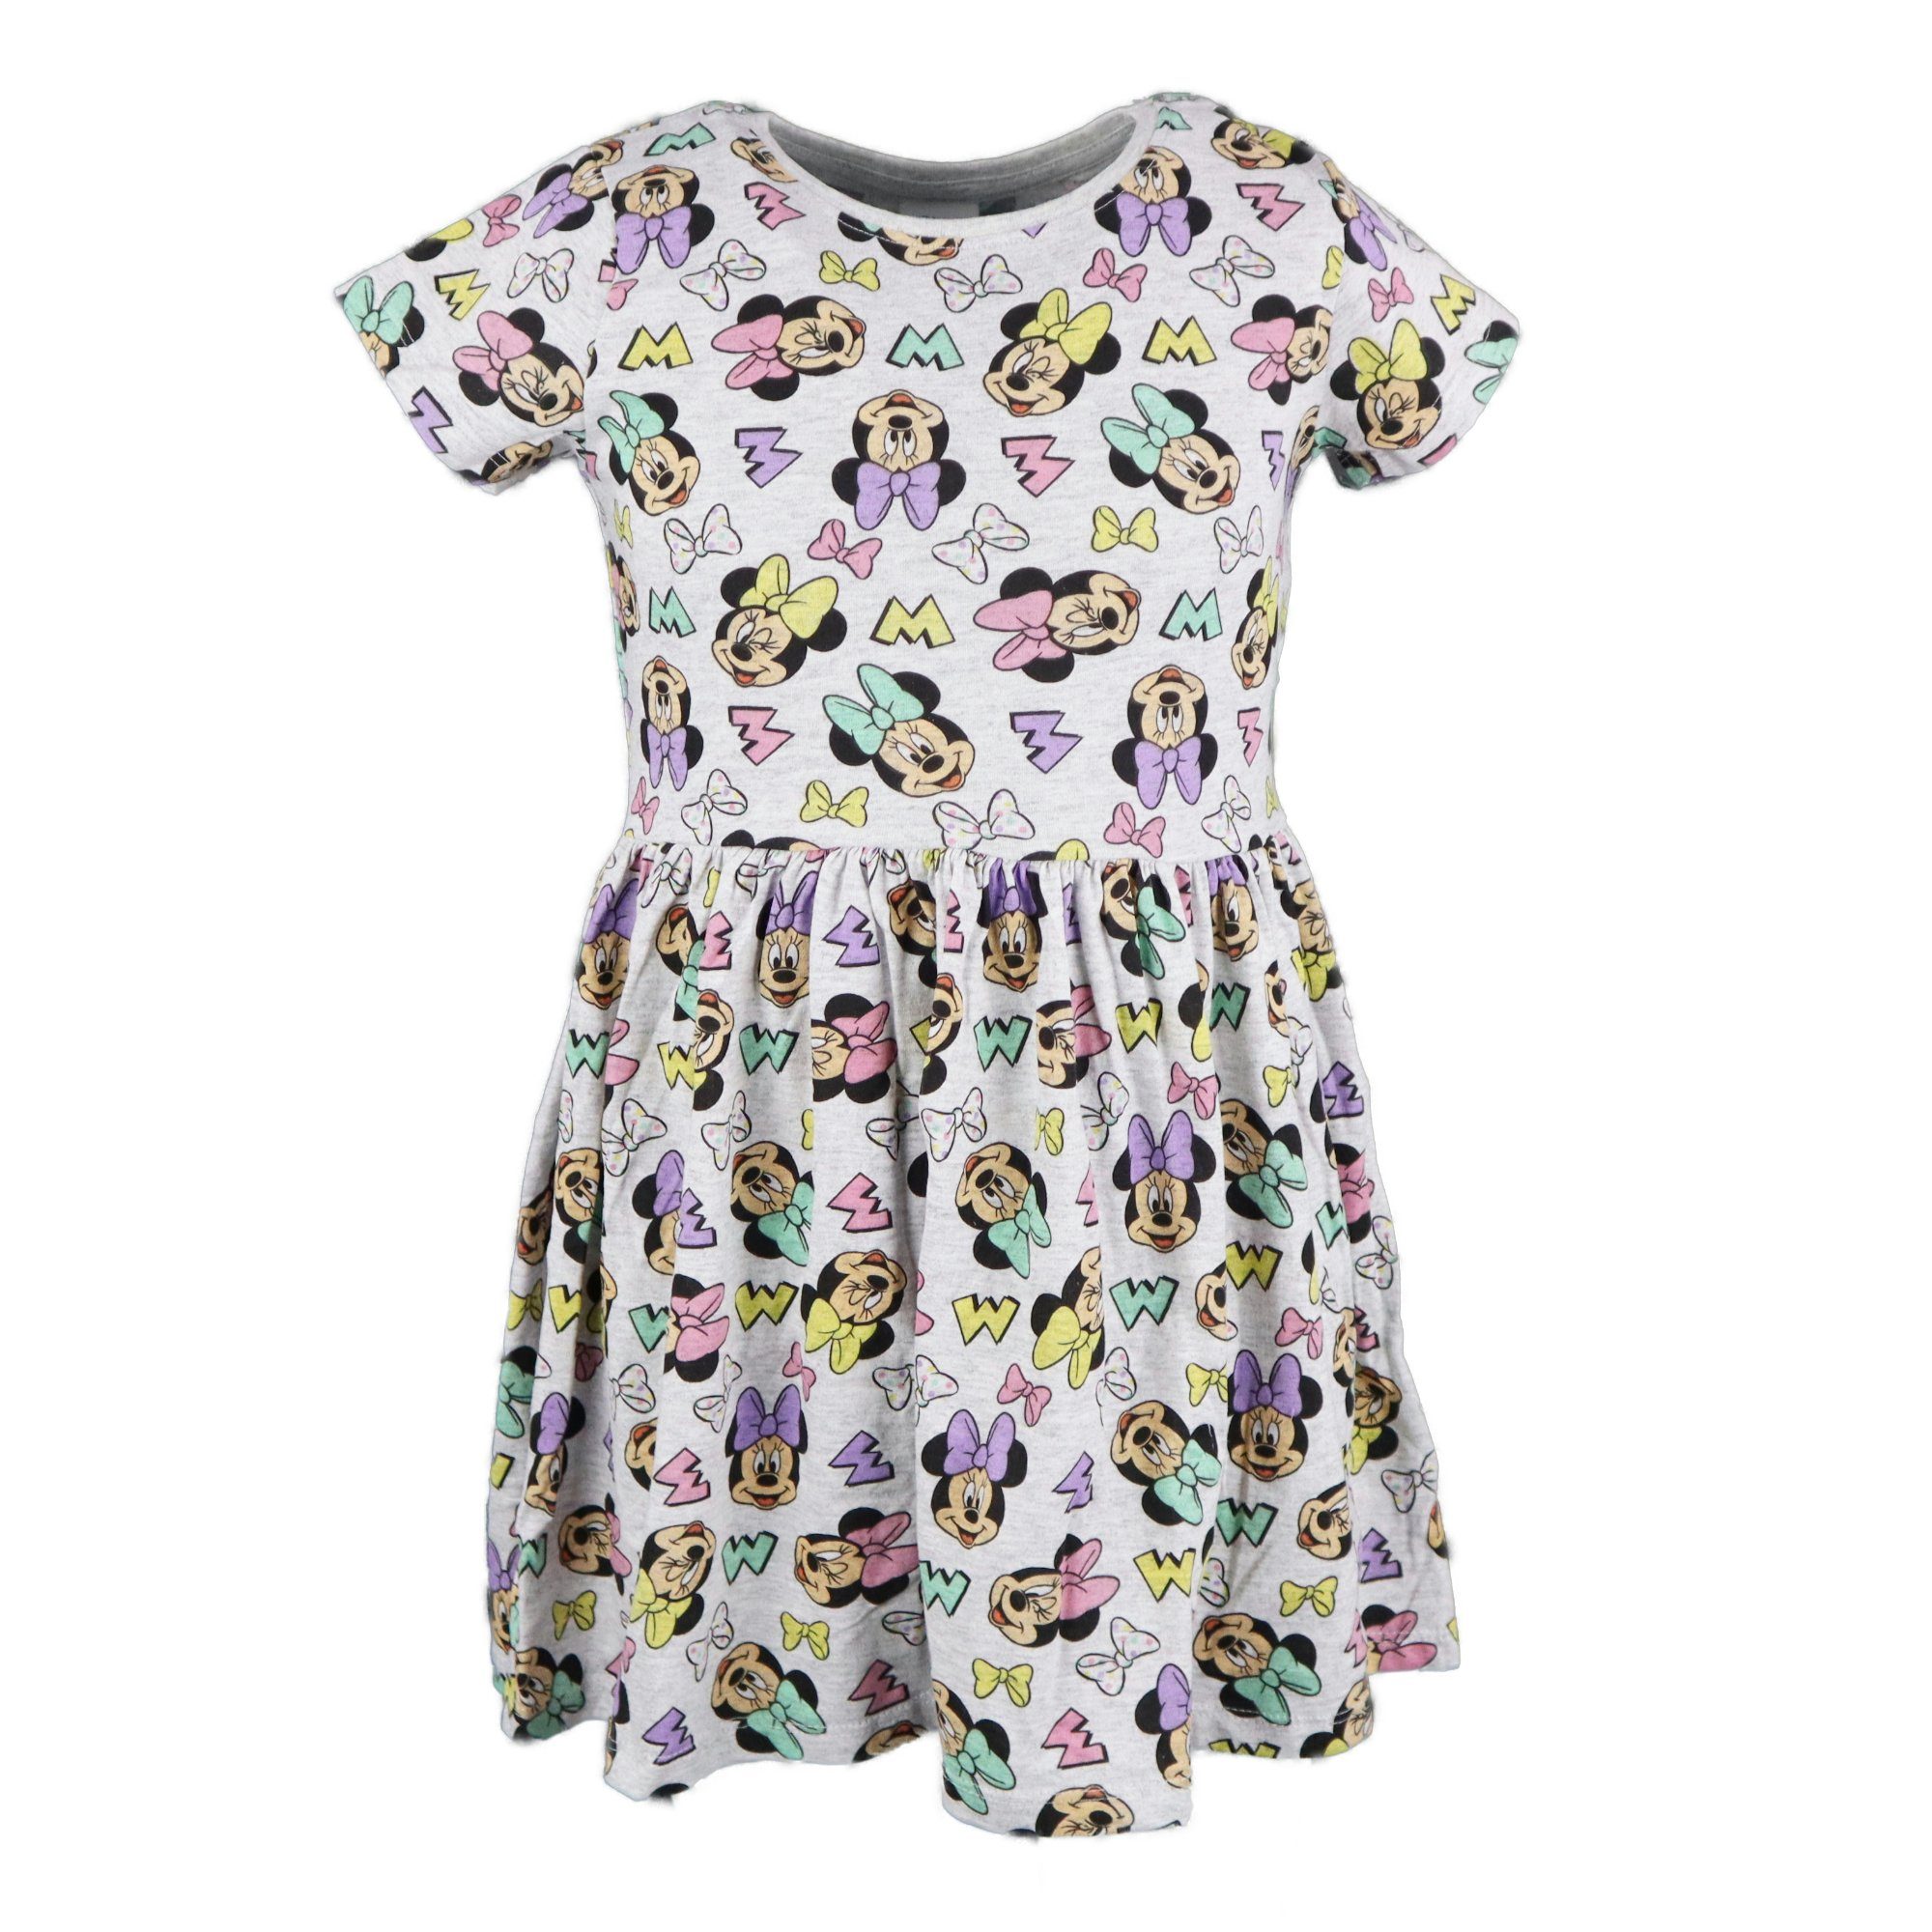 Neu!Disney Minnie Mouse Kleid Sommerkleid Festkleid zweilagig Baumwolle 62 68 74 